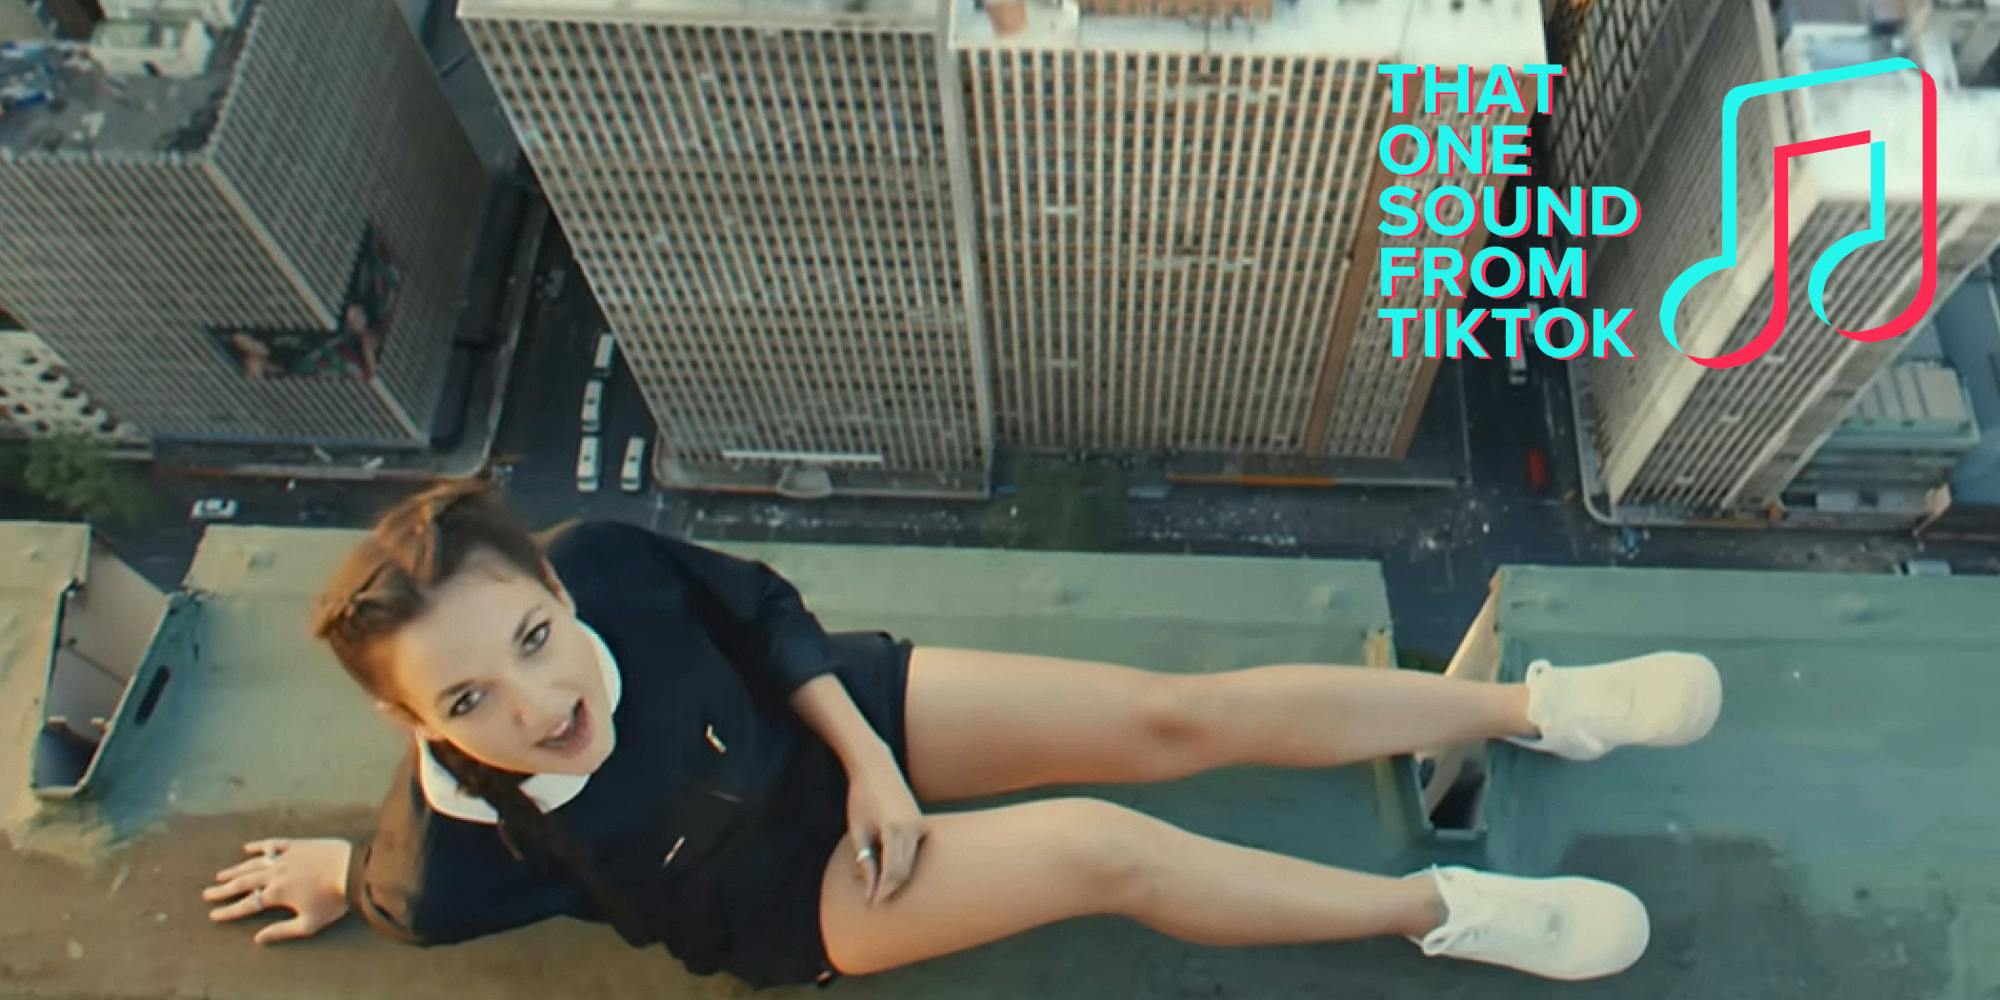 Jain - Makeba music video city scene with "That One Sound From TikTok" logo in top right corner